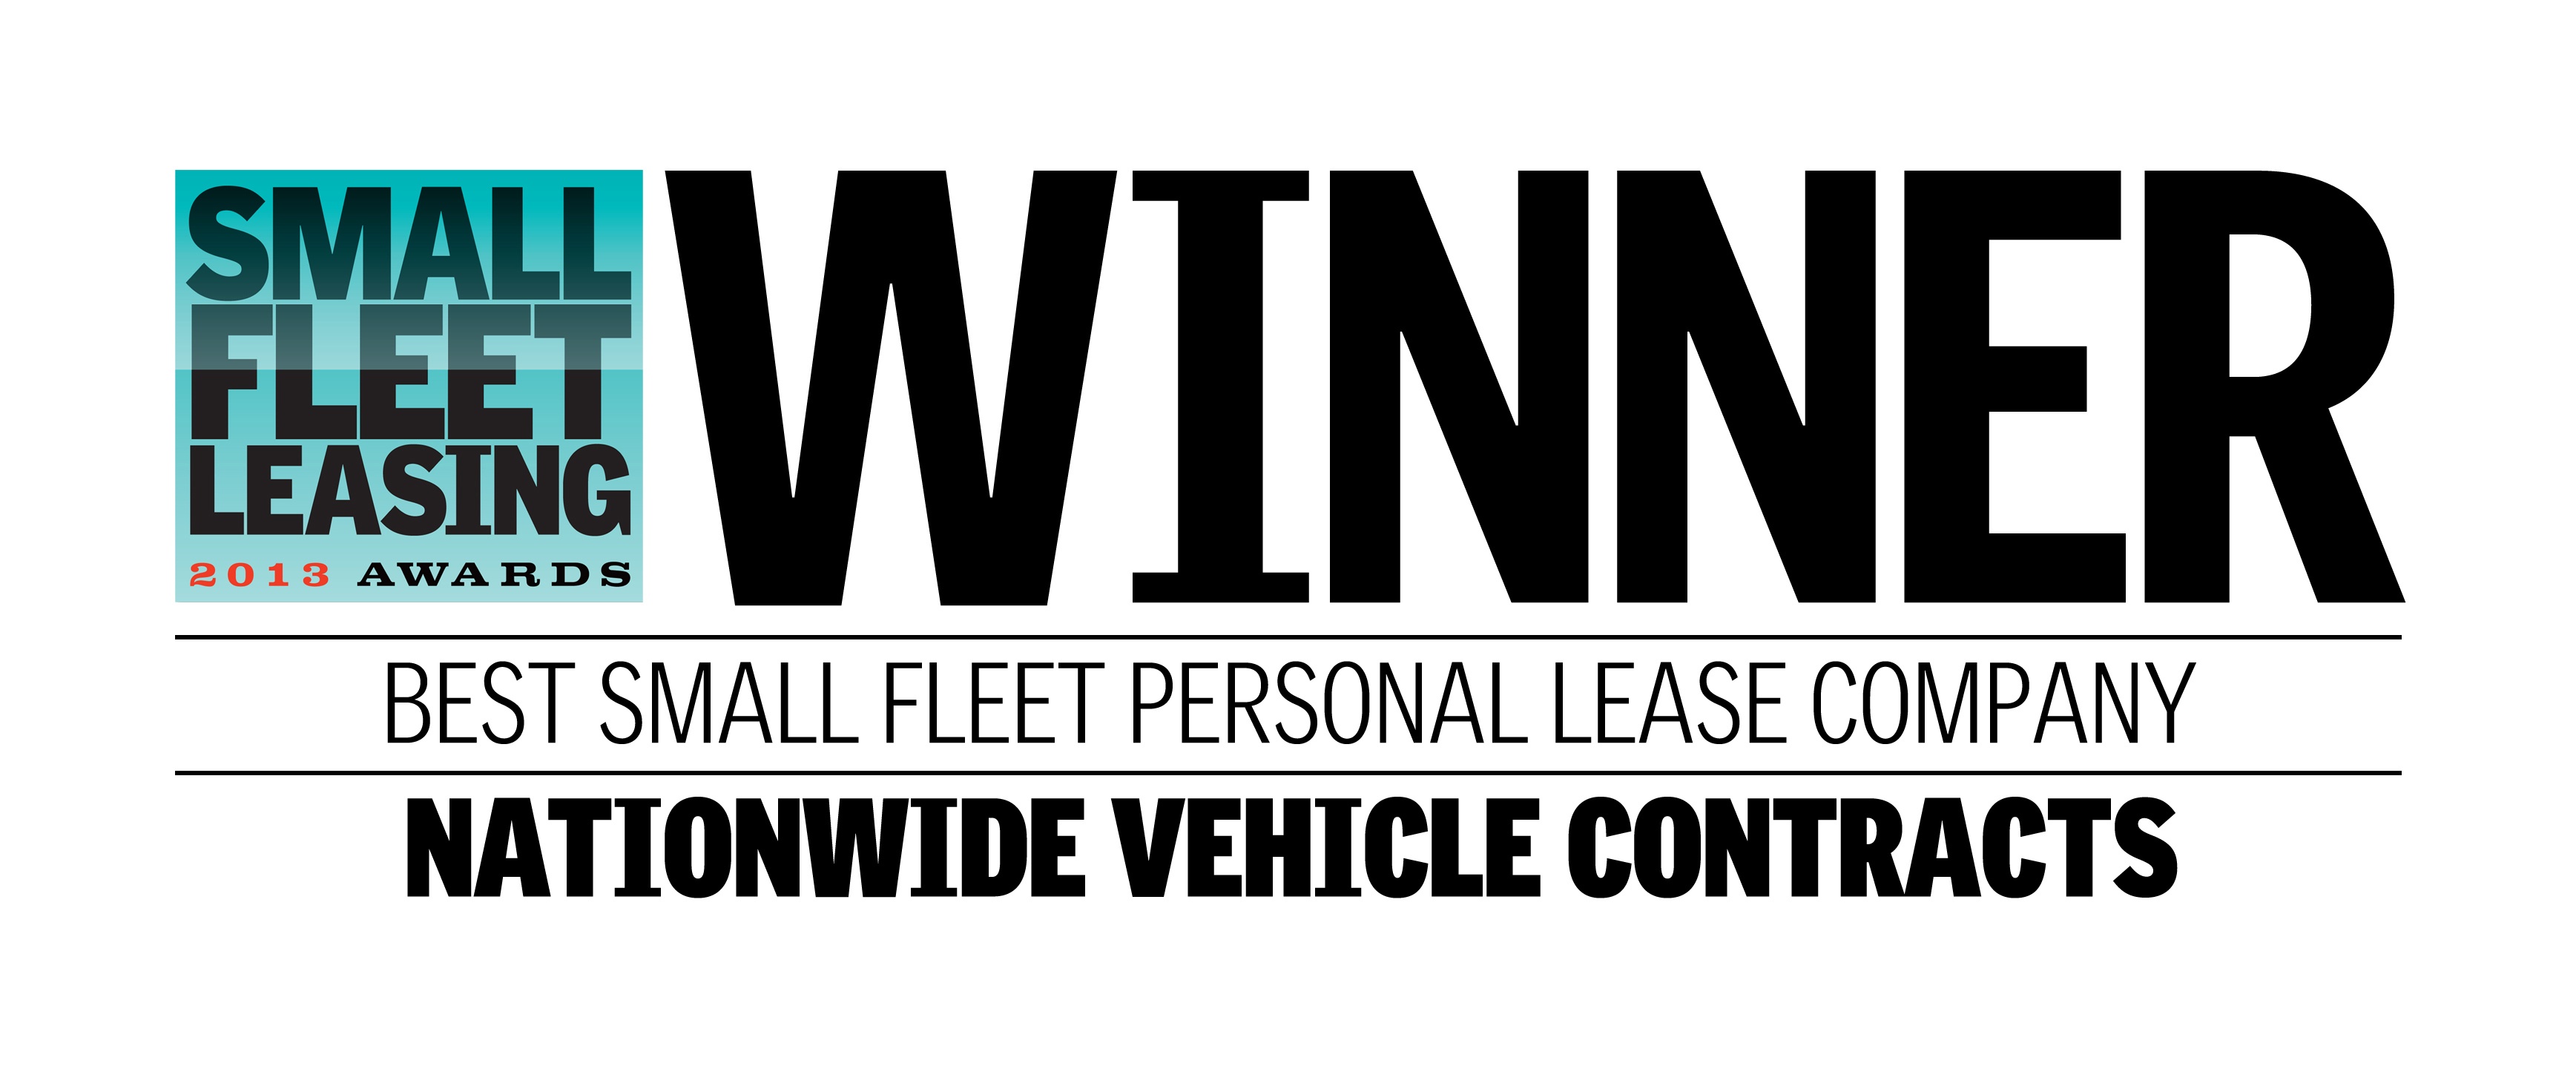 Best Small Fleet Personal Lease Company Award